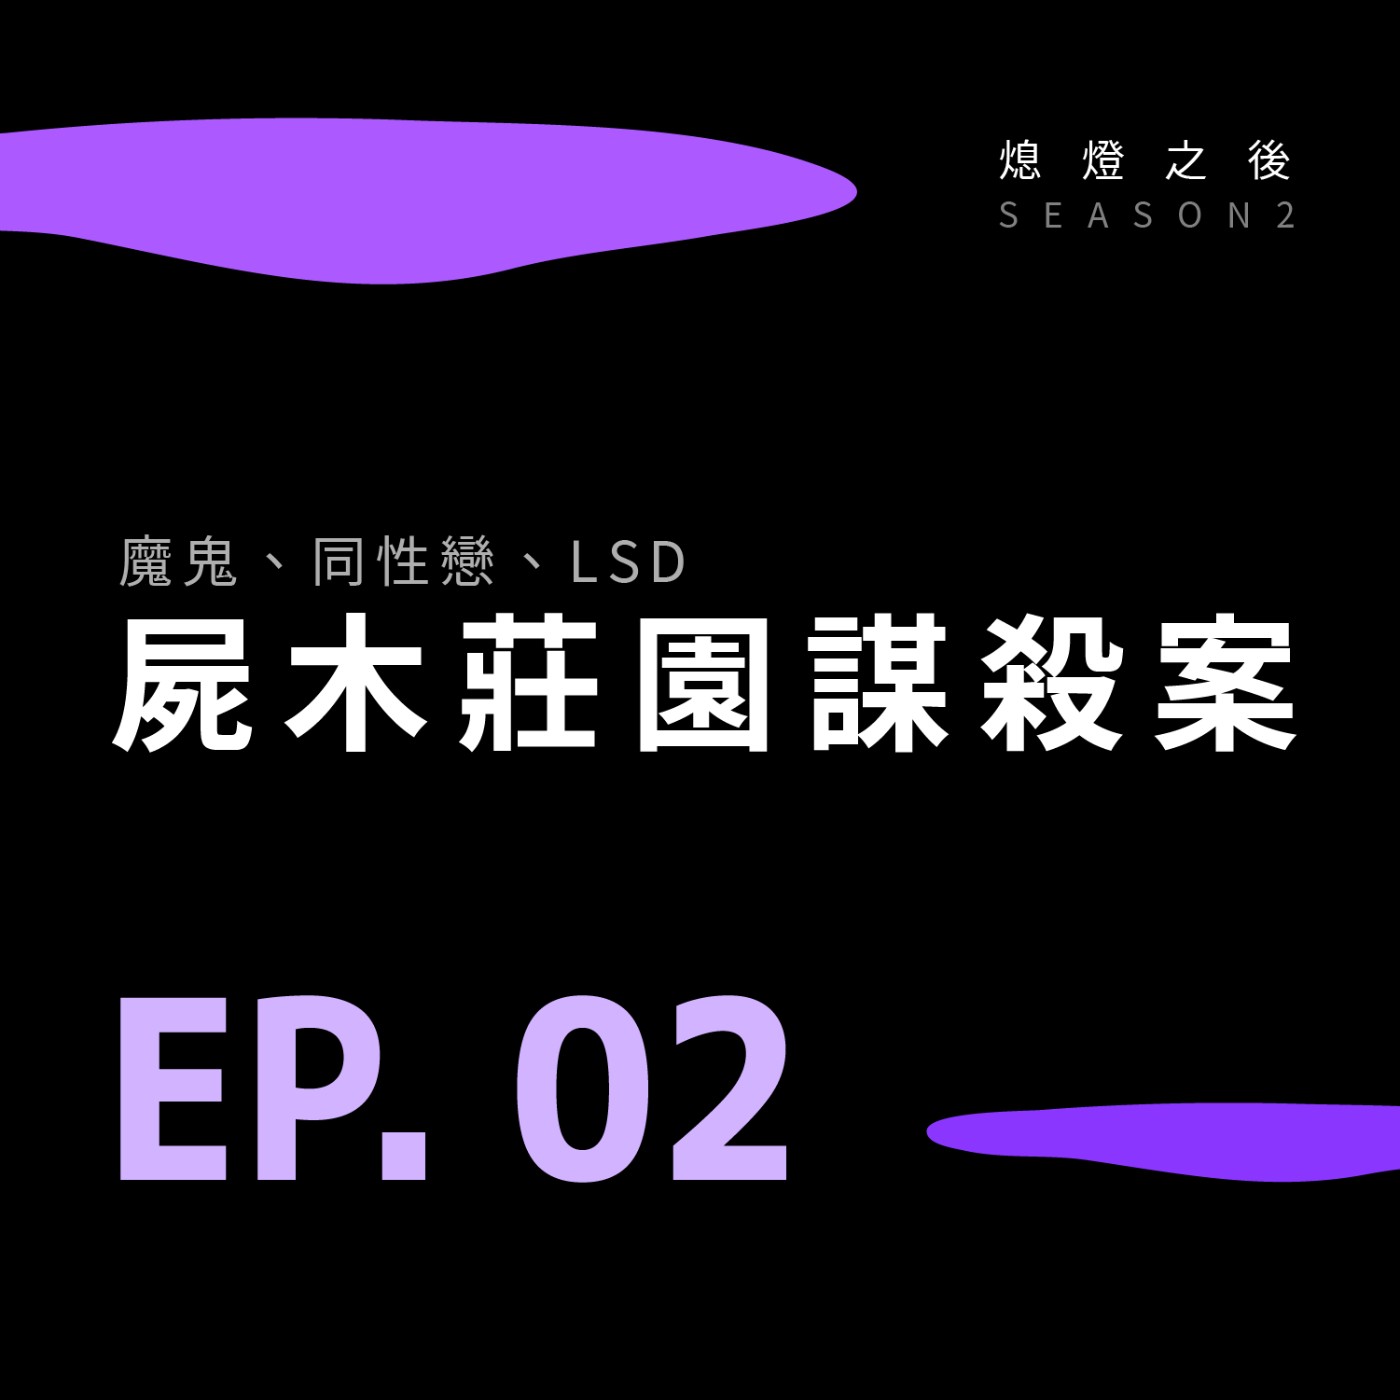 S2 EP.02 魔鬼、同性戀、LSD｜屍木莊園謀殺案